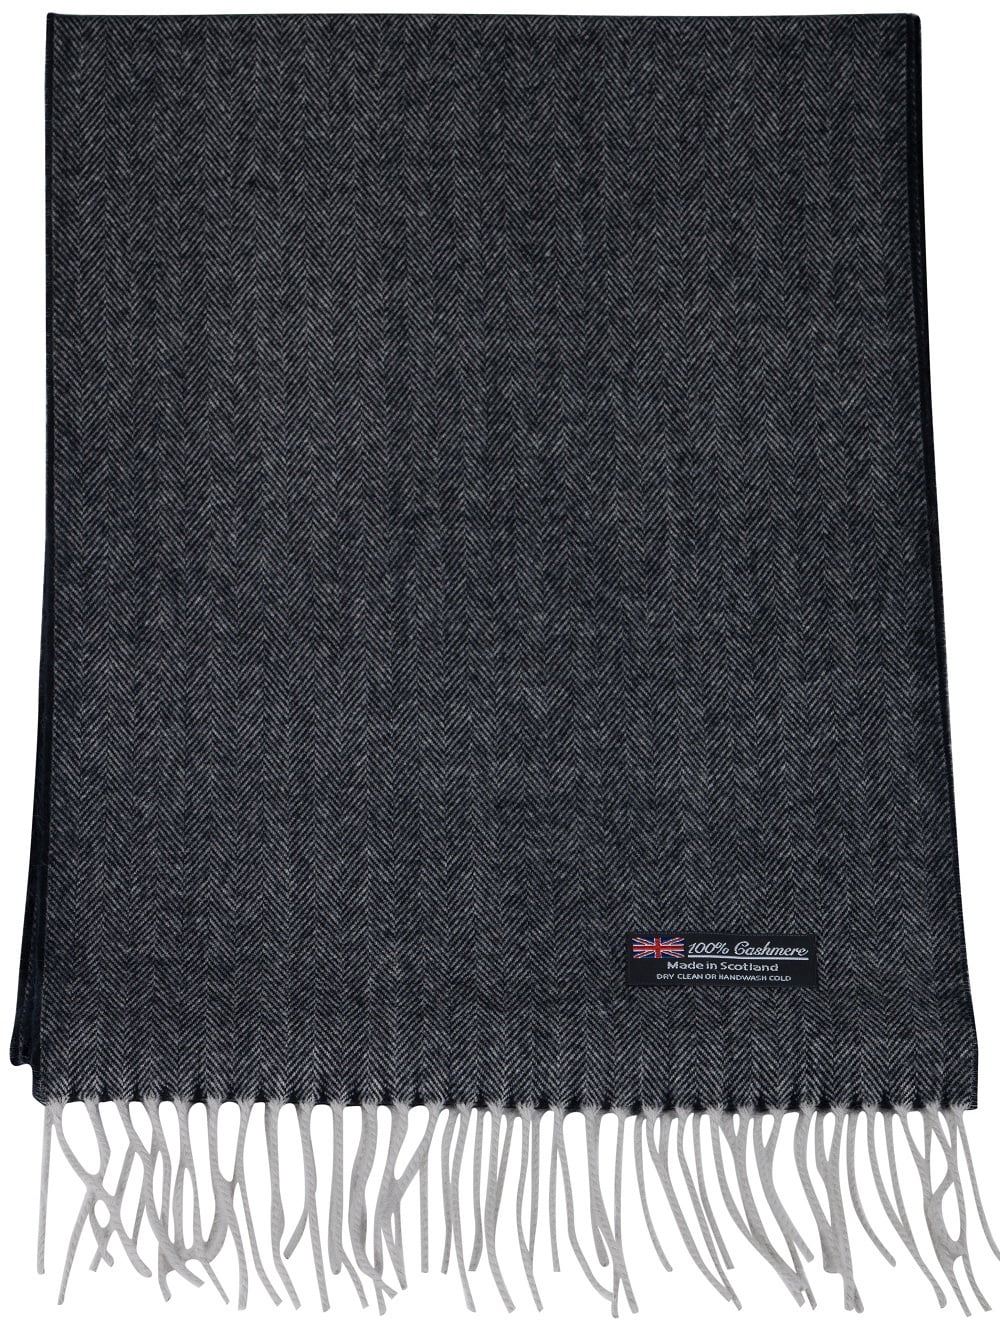 NEW 100% CASHMERE SCARF Scotland Soft Wool Wrap Plaid Check Grays Black MEN 